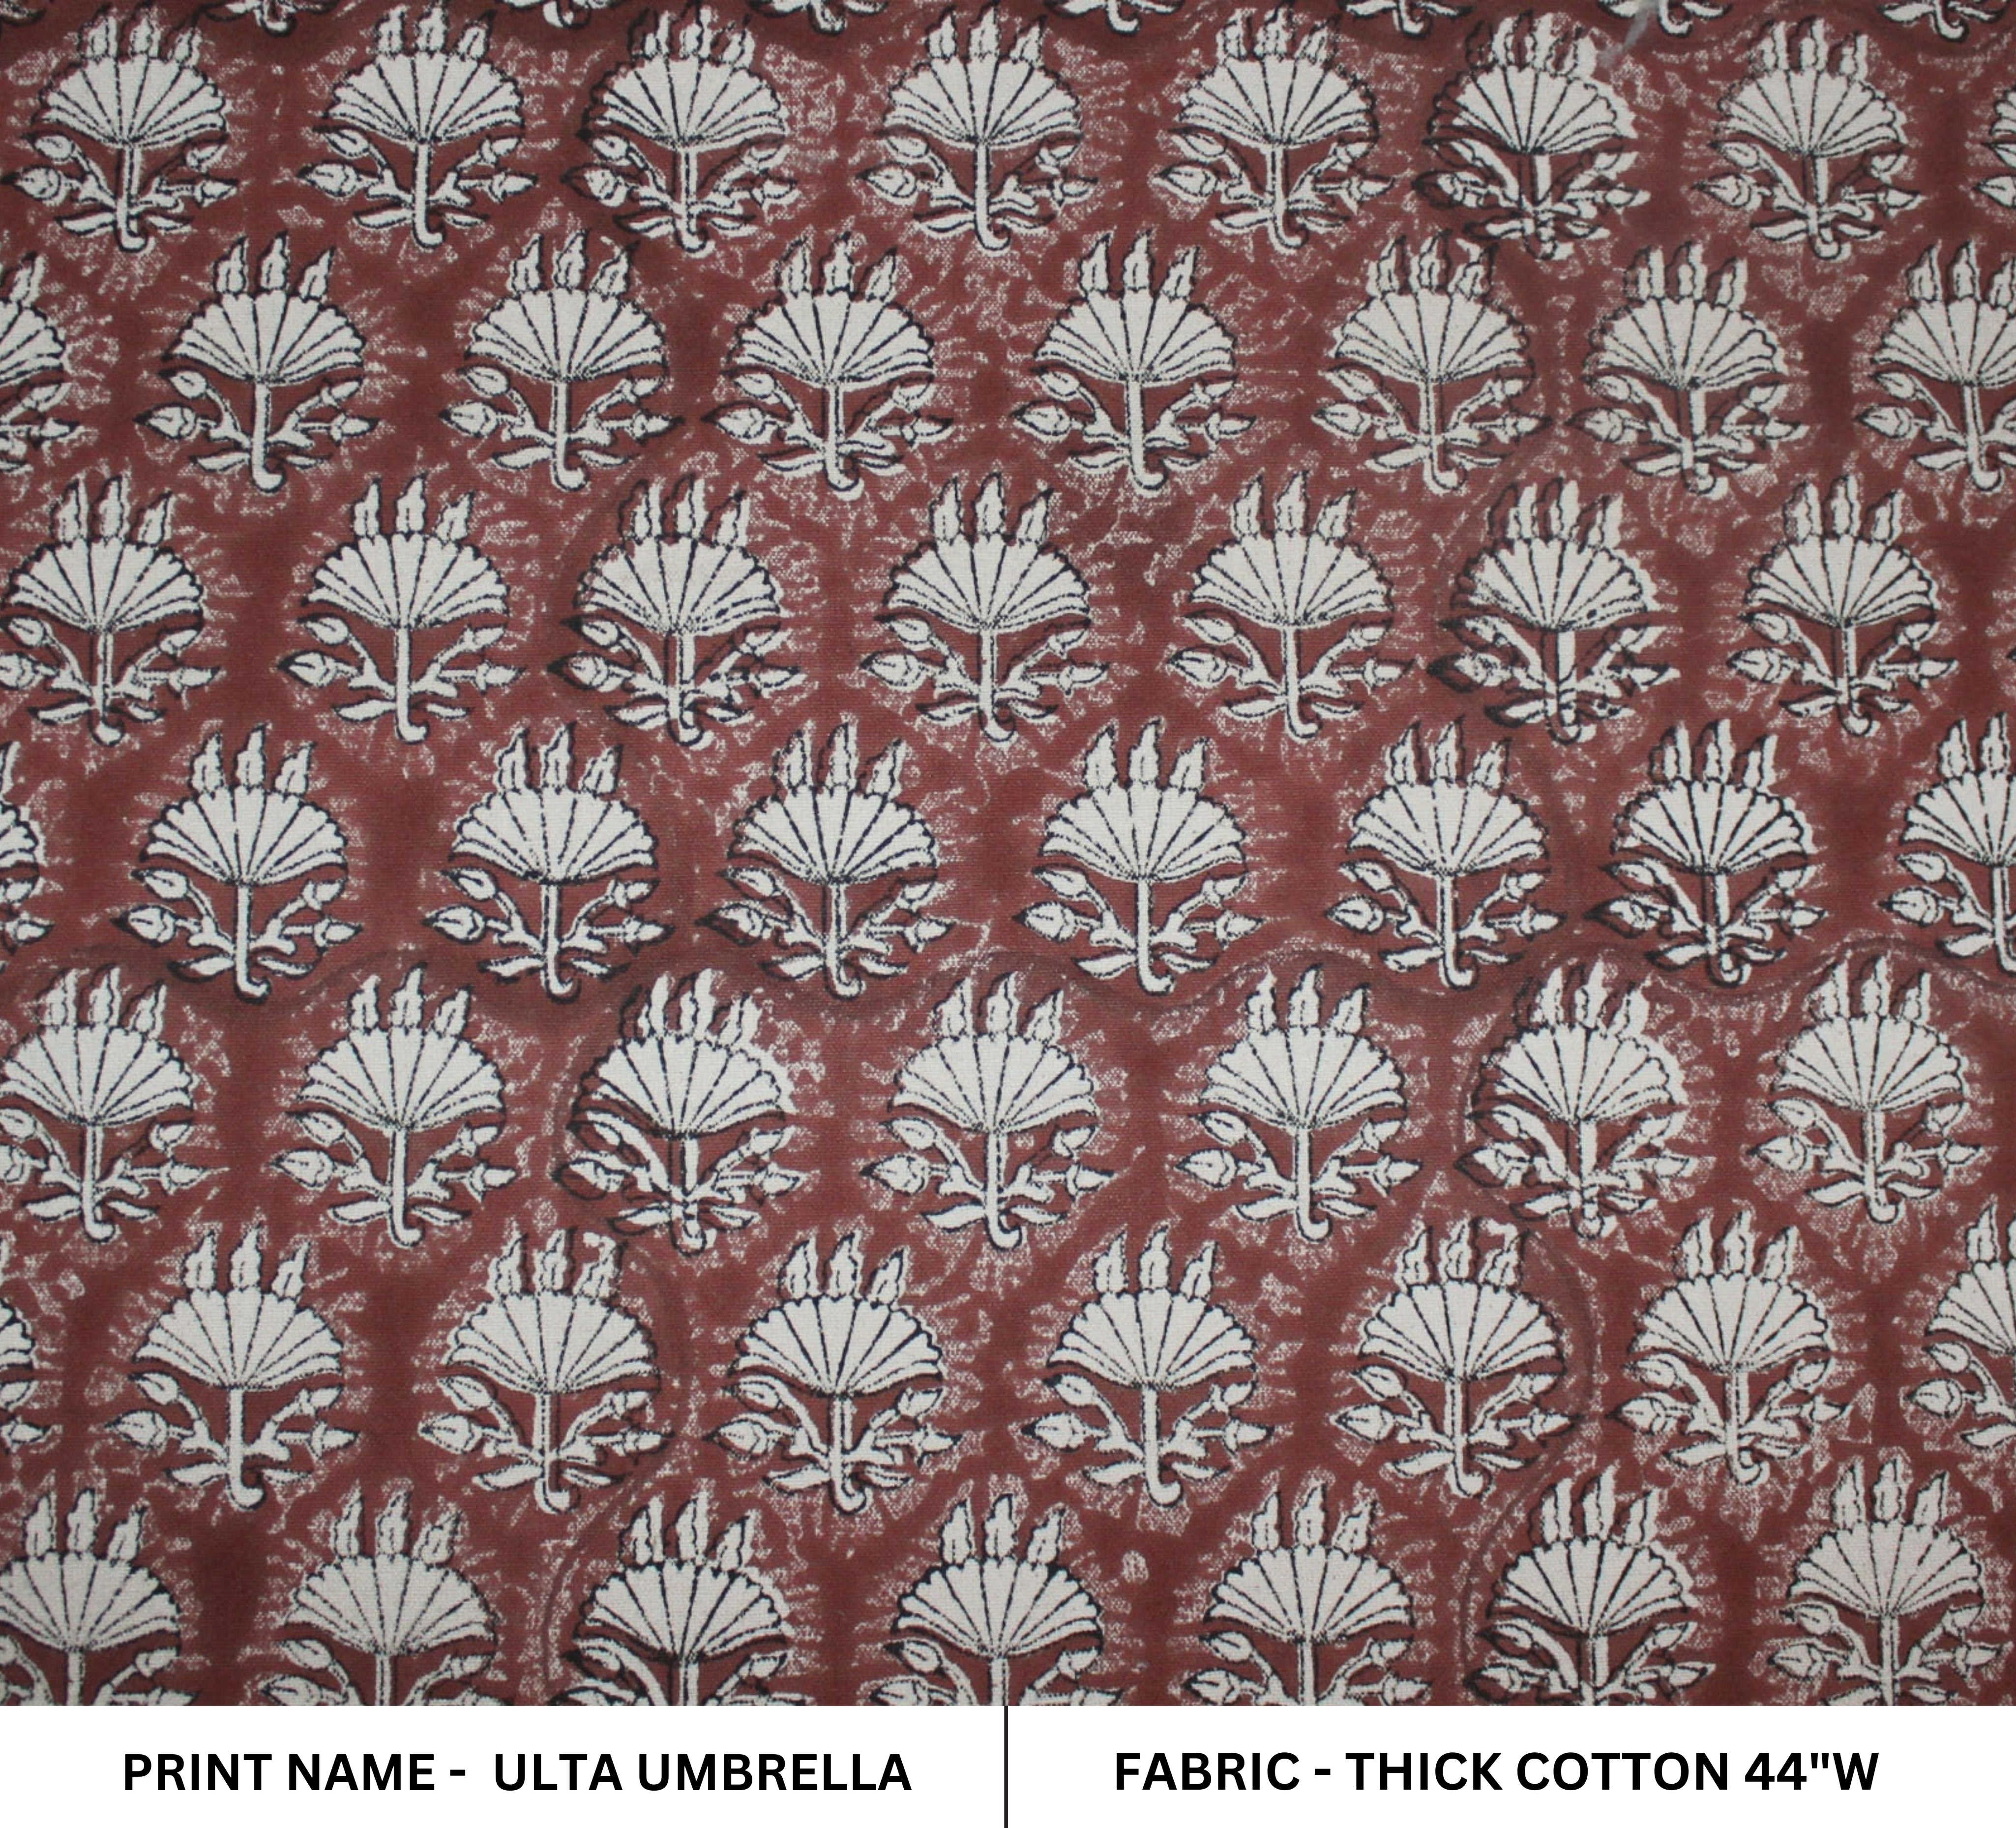 Block Print Linen Fabric, Ulta Umbrella  Block Print Thick Linen Fabric  Reddish Brown Floral Print Upholstery Fabric, Pillow Cover Fabric, Linen By The Yard